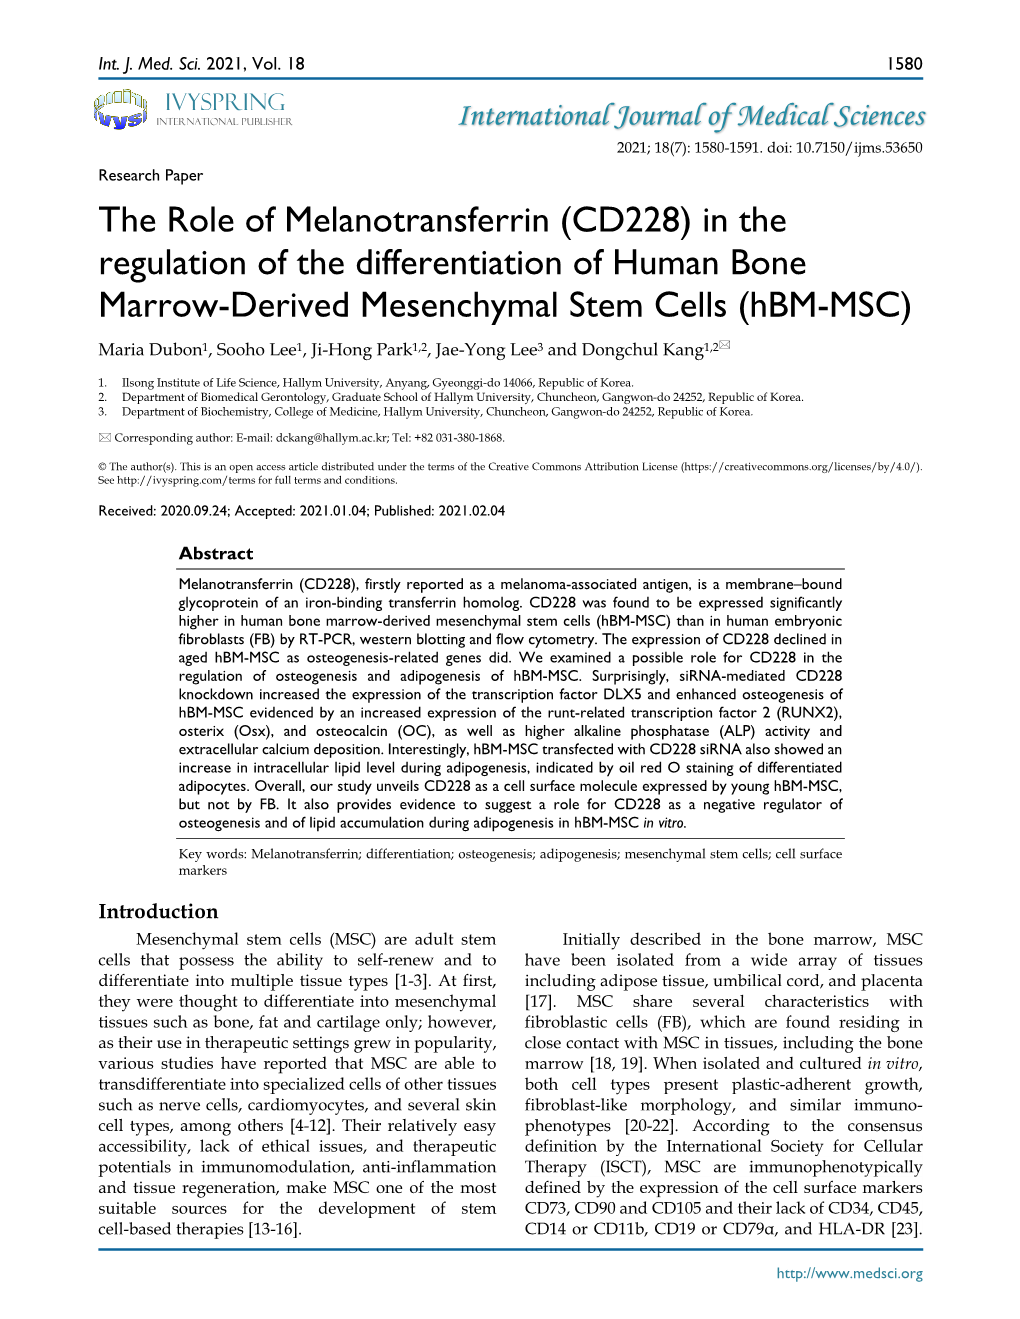 The Role of Melanotransferrin (CD228)